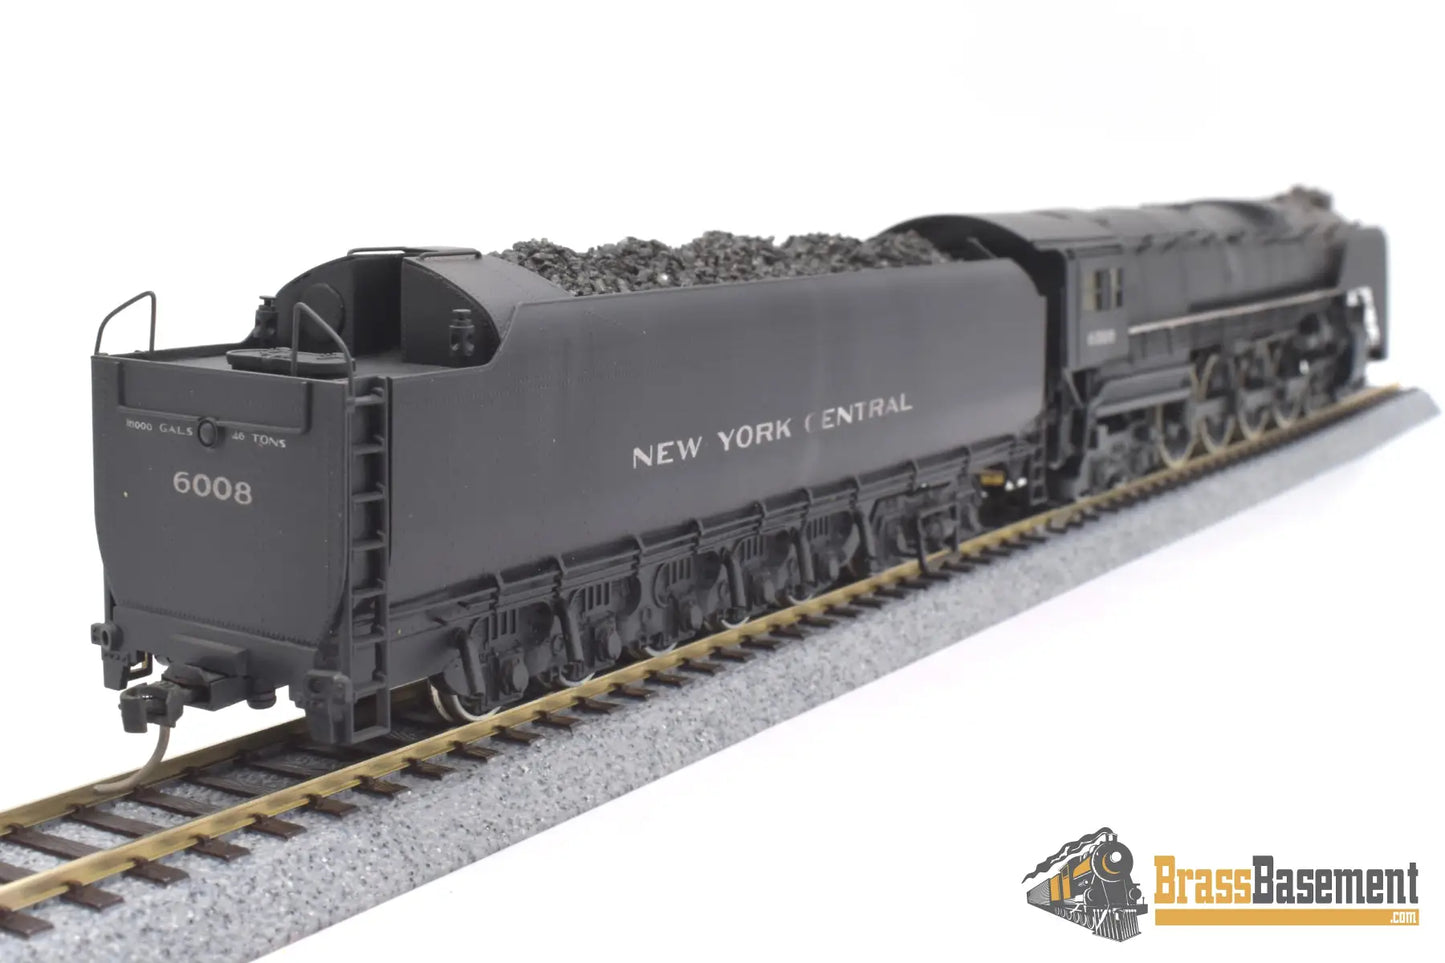 Ho Brass - Npp New York Central Nyc S - 1B Niagara 4 - 8 - 4 #6008 Factory Paint Nice Steam